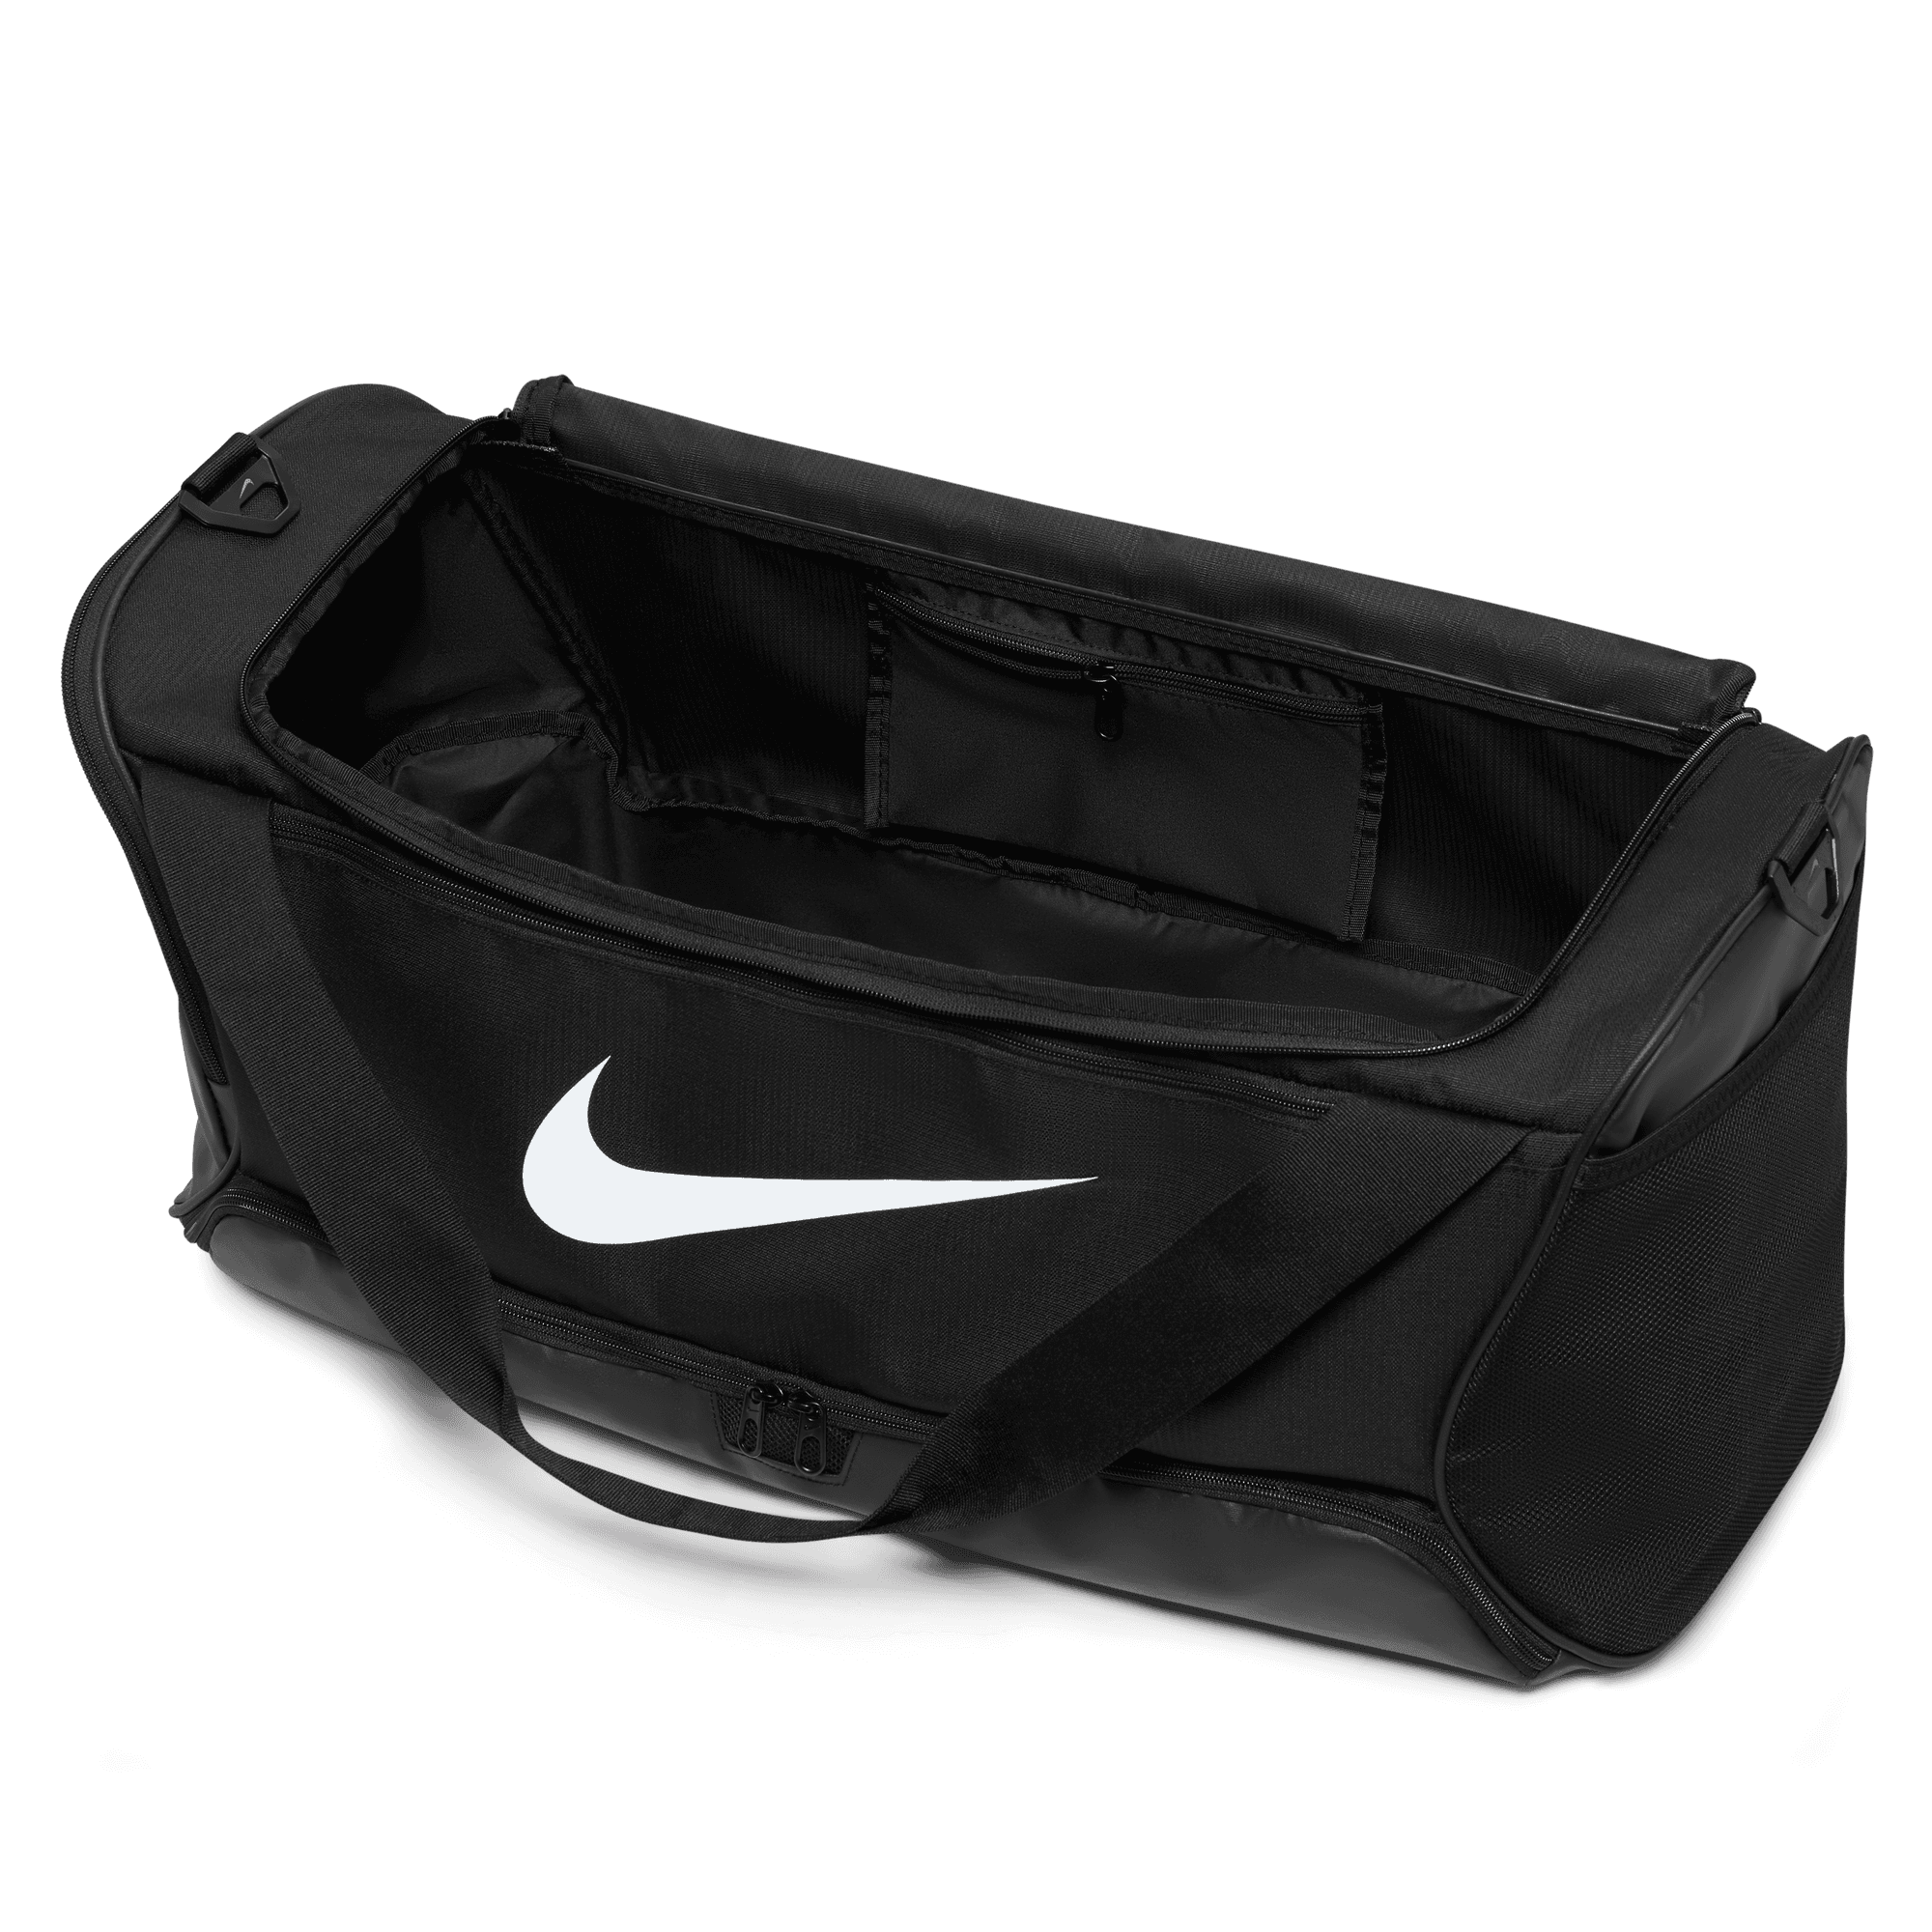 Brasilia 9.5 Training Duffel Bag (Medium, 60L) from Nike